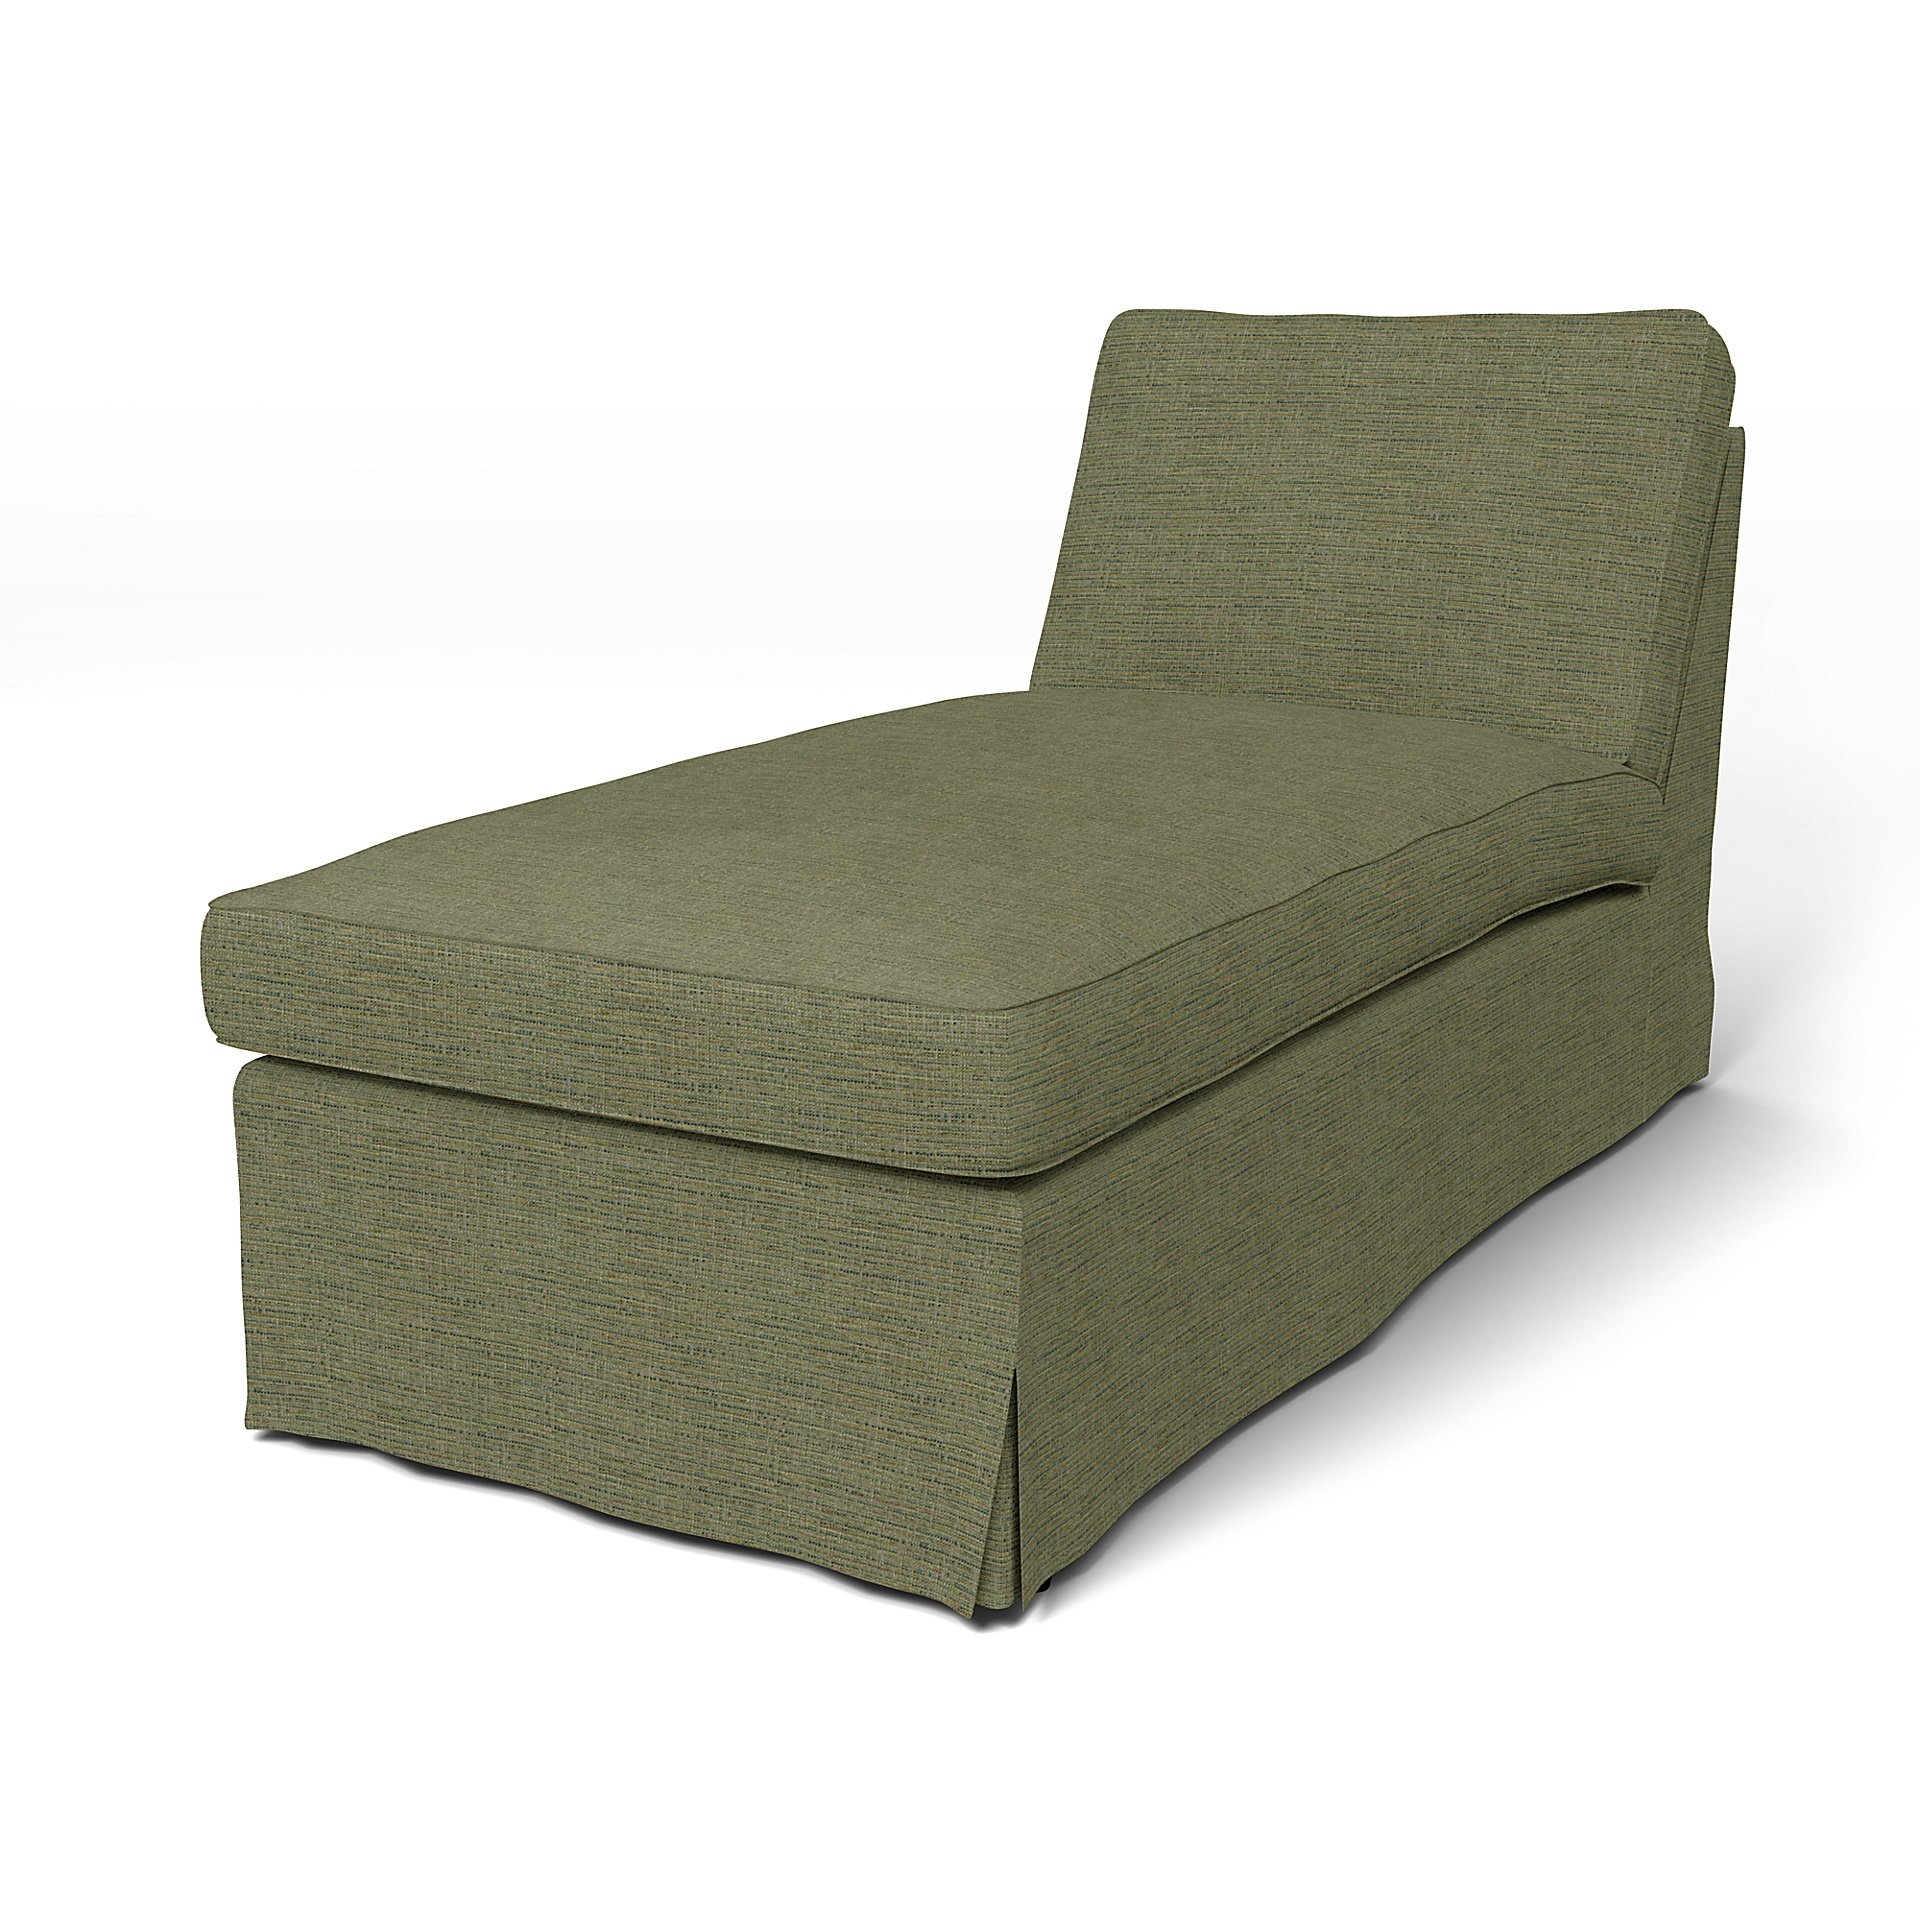 IKEA - Ektorp Chaise Longue Cover, Meadow Green, Boucle & Texture - Bemz